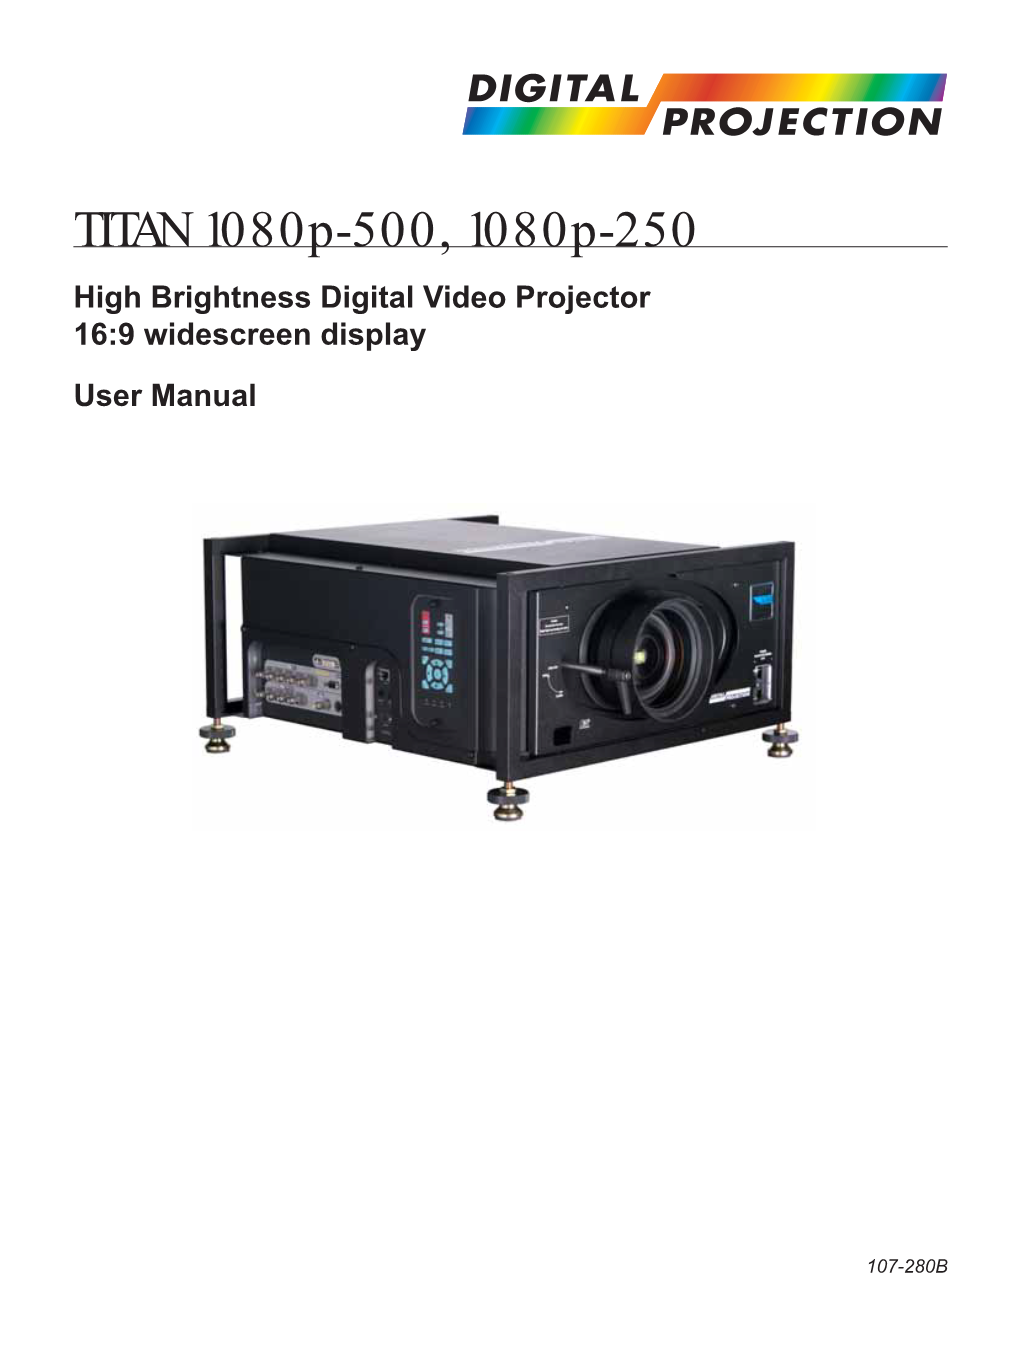 TITAN 1080P-500, 1080P-250 High Brightness Digital Video Projector 16:9 Widescreen Display User Manual